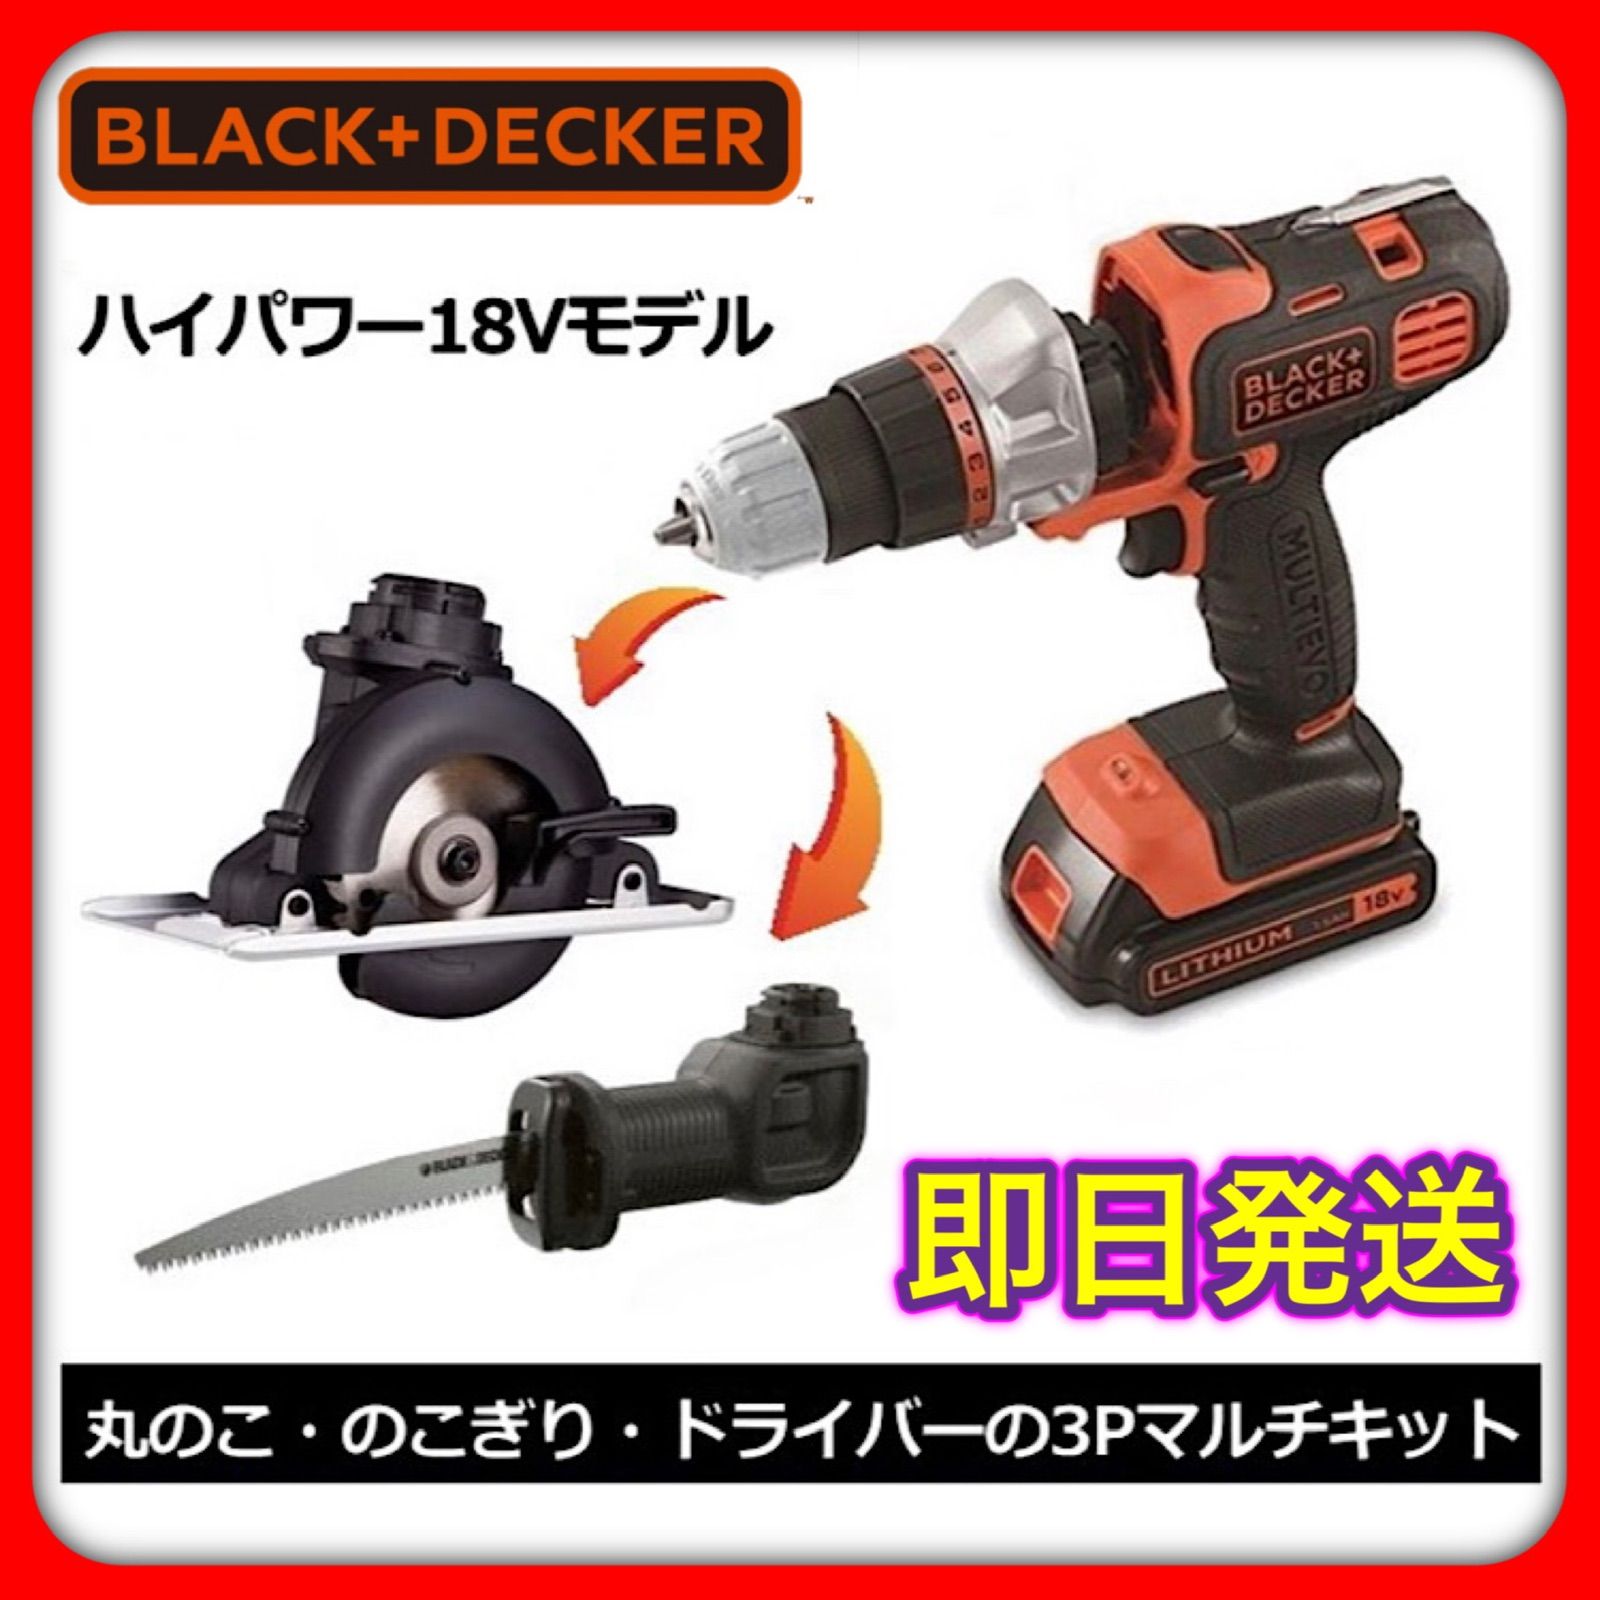 BLACK + DECKER ブラックアンドデッカー 電動マルチ ツールキット